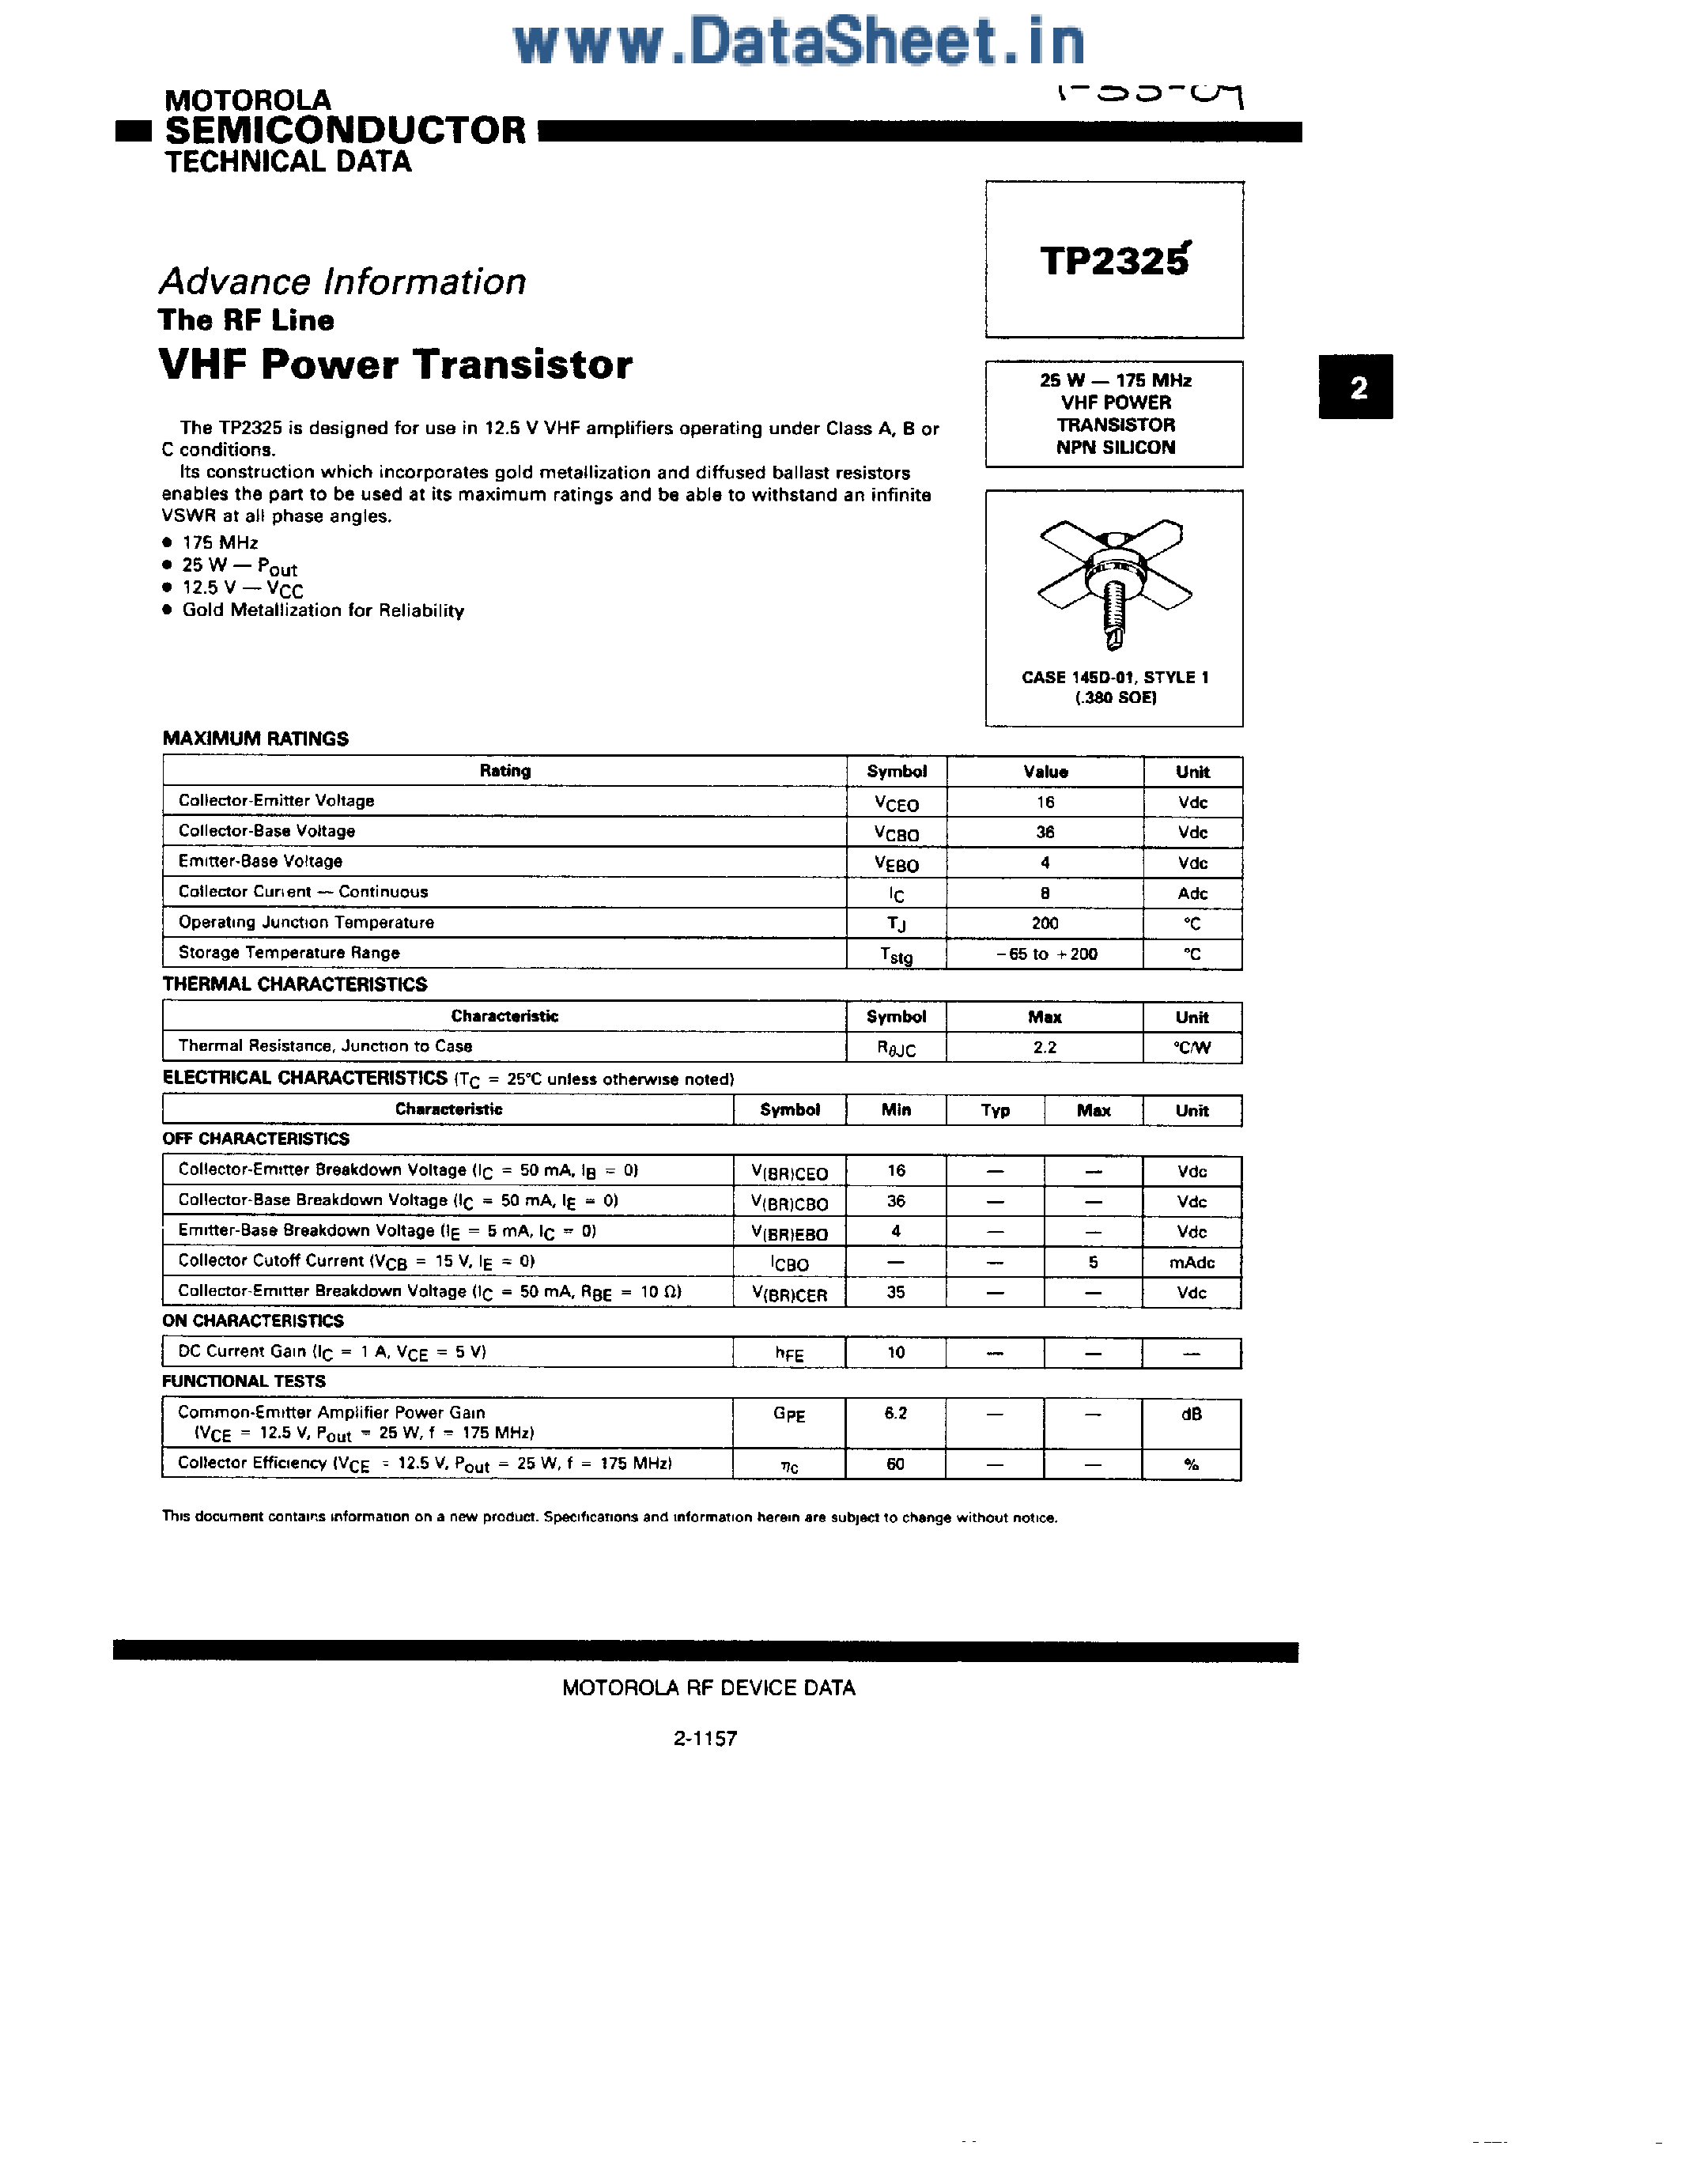 Даташит TP2325 - VHF Power Transistor страница 1